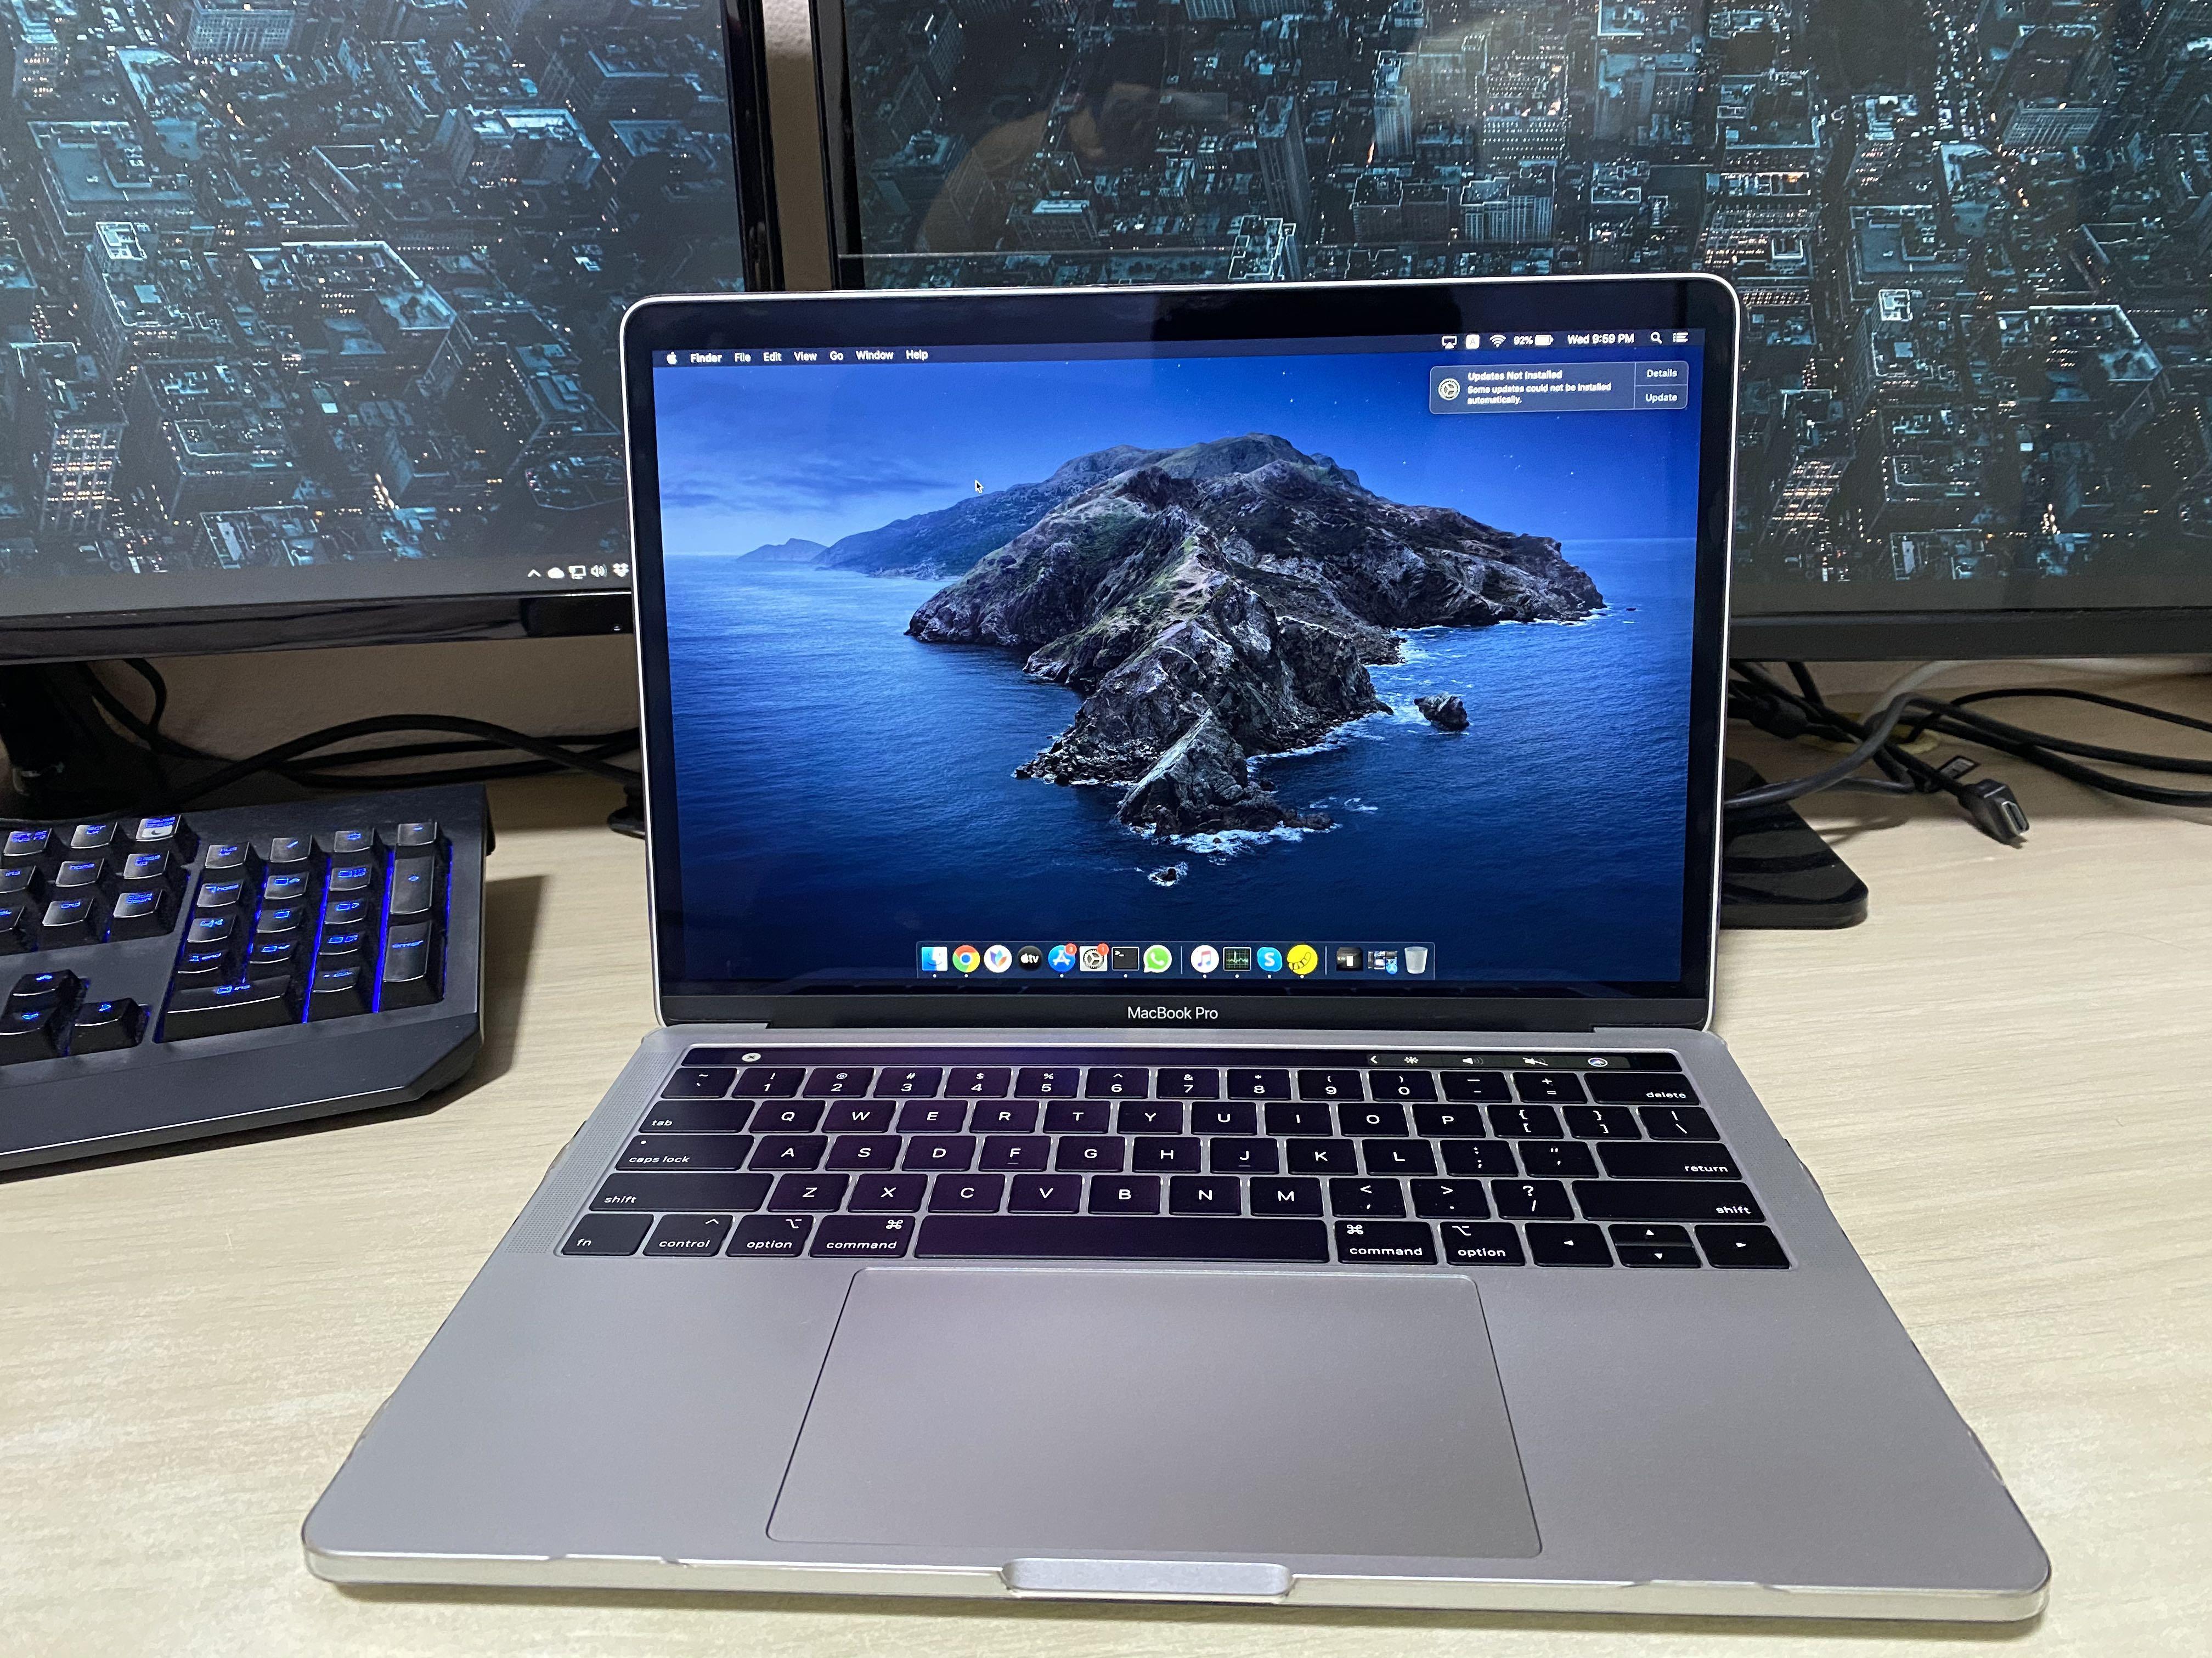 2019 MacBook Pro Two Thunderbolt 3 ports